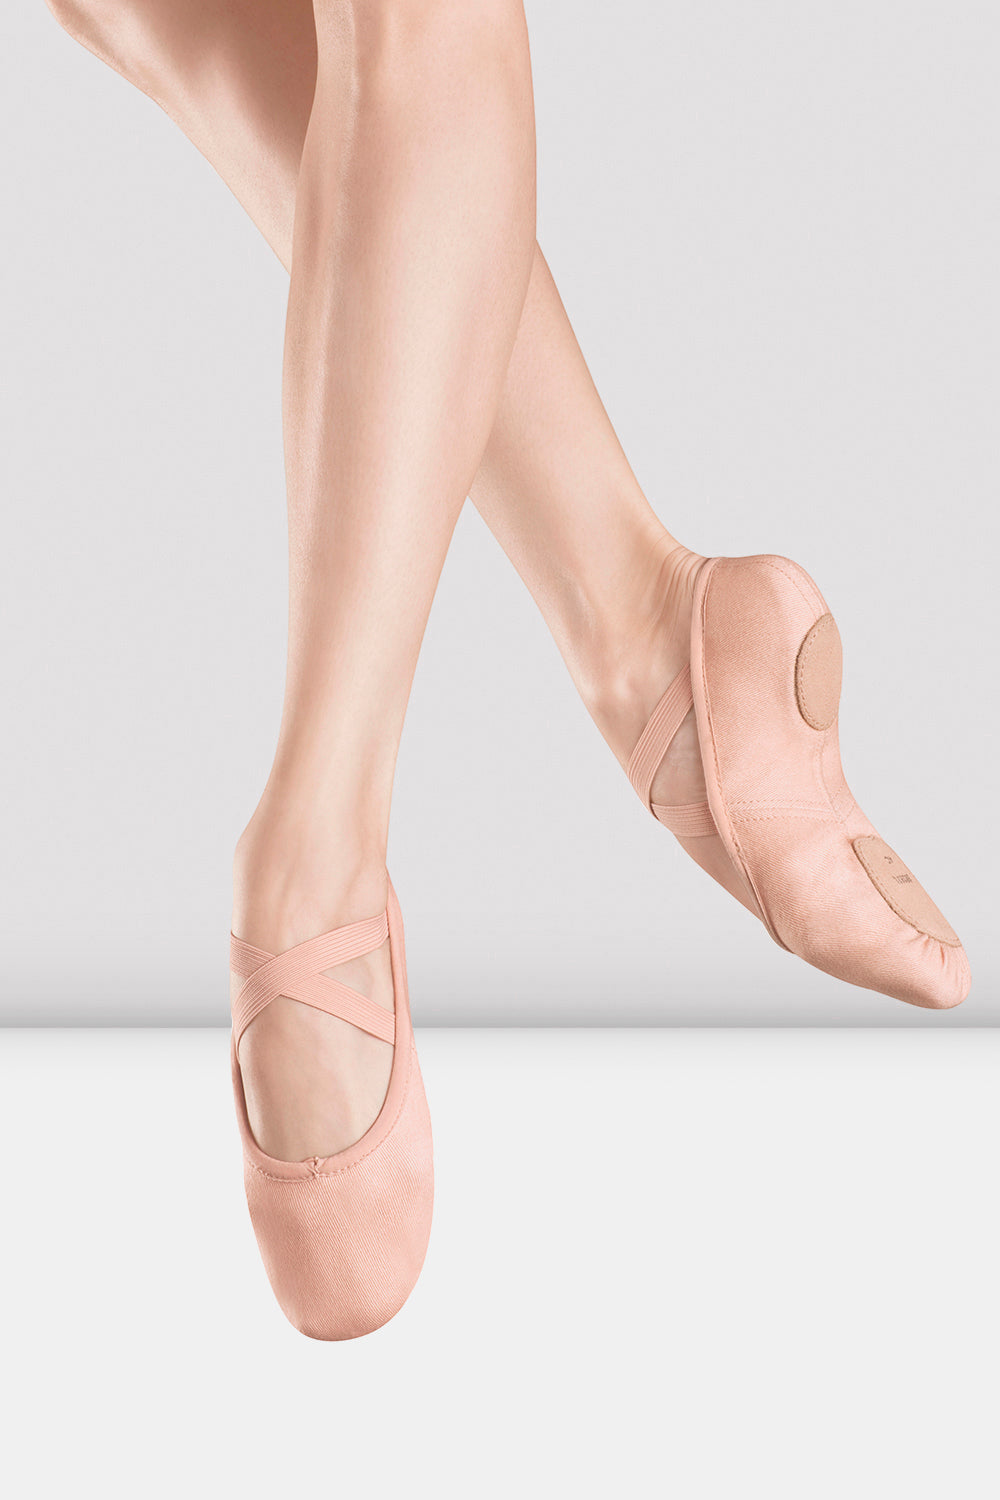 BLOCH Ladies Zenith Stretch Canvas Ballet Shoes, Pink Canvas